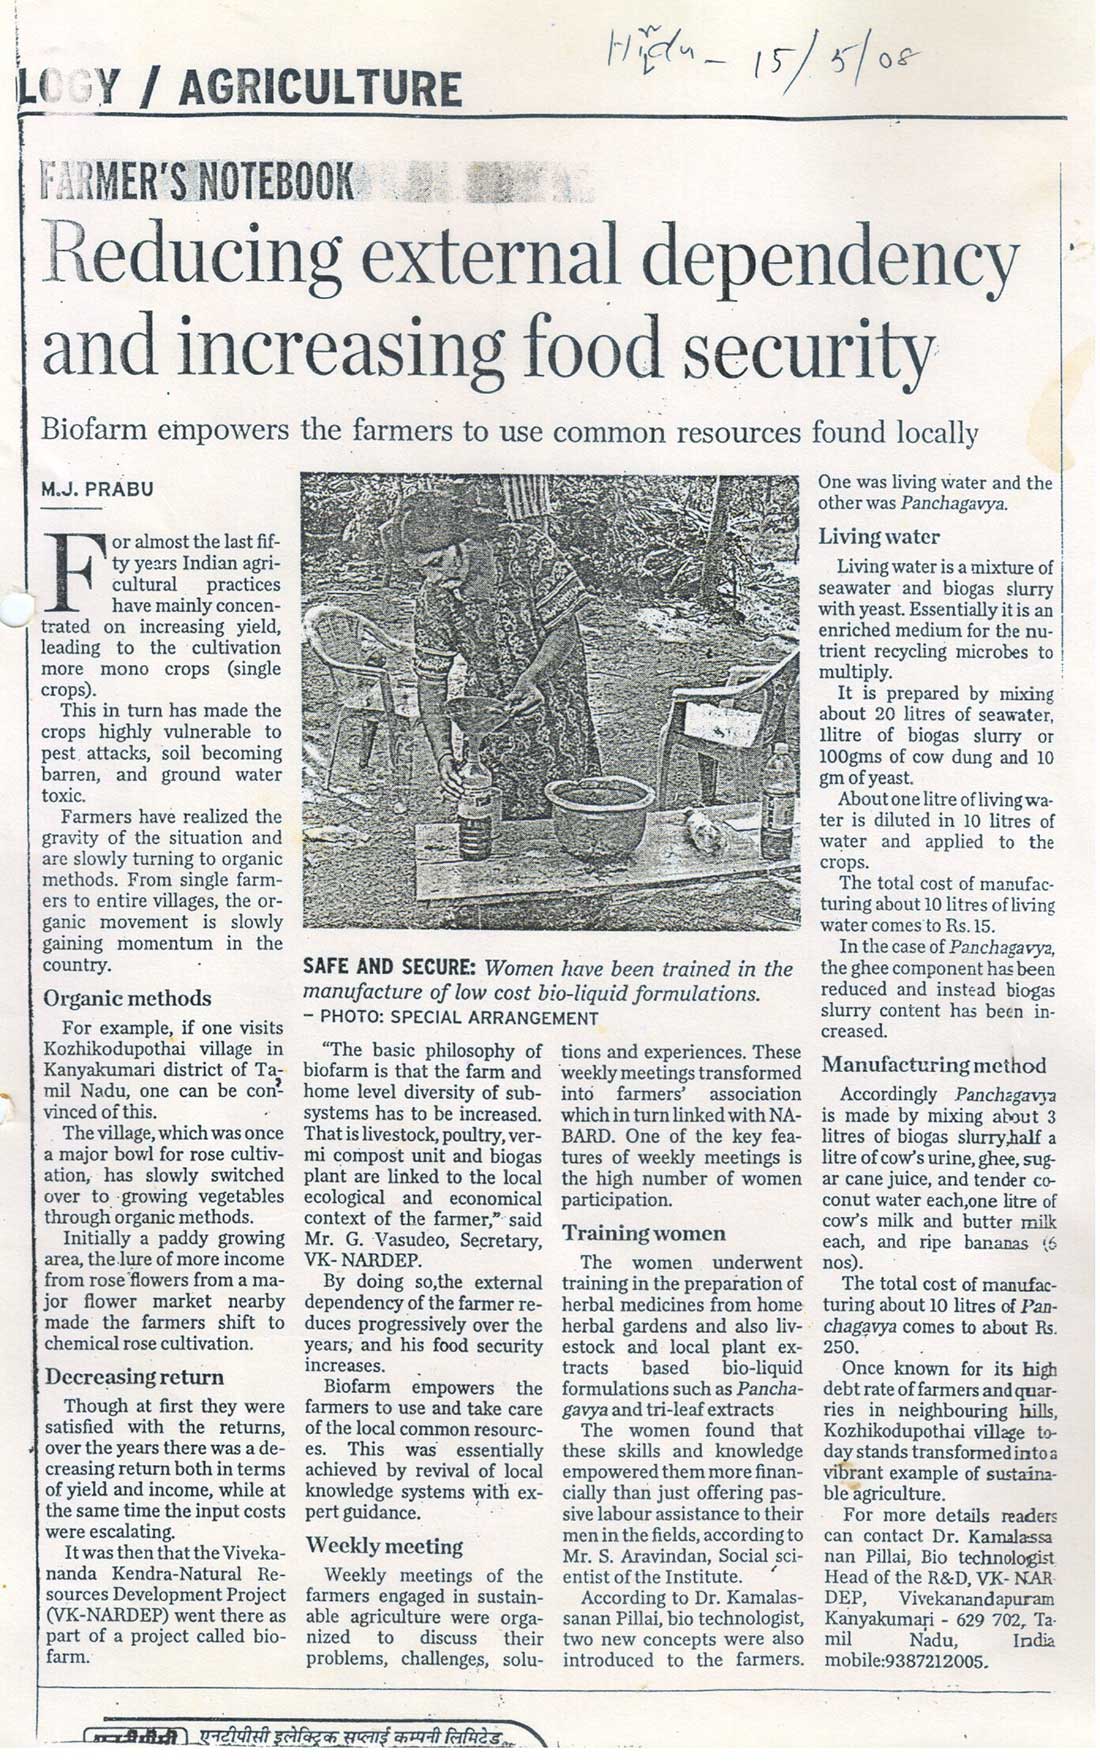 Article on Bio-farm in Hindu - 15 May 2008